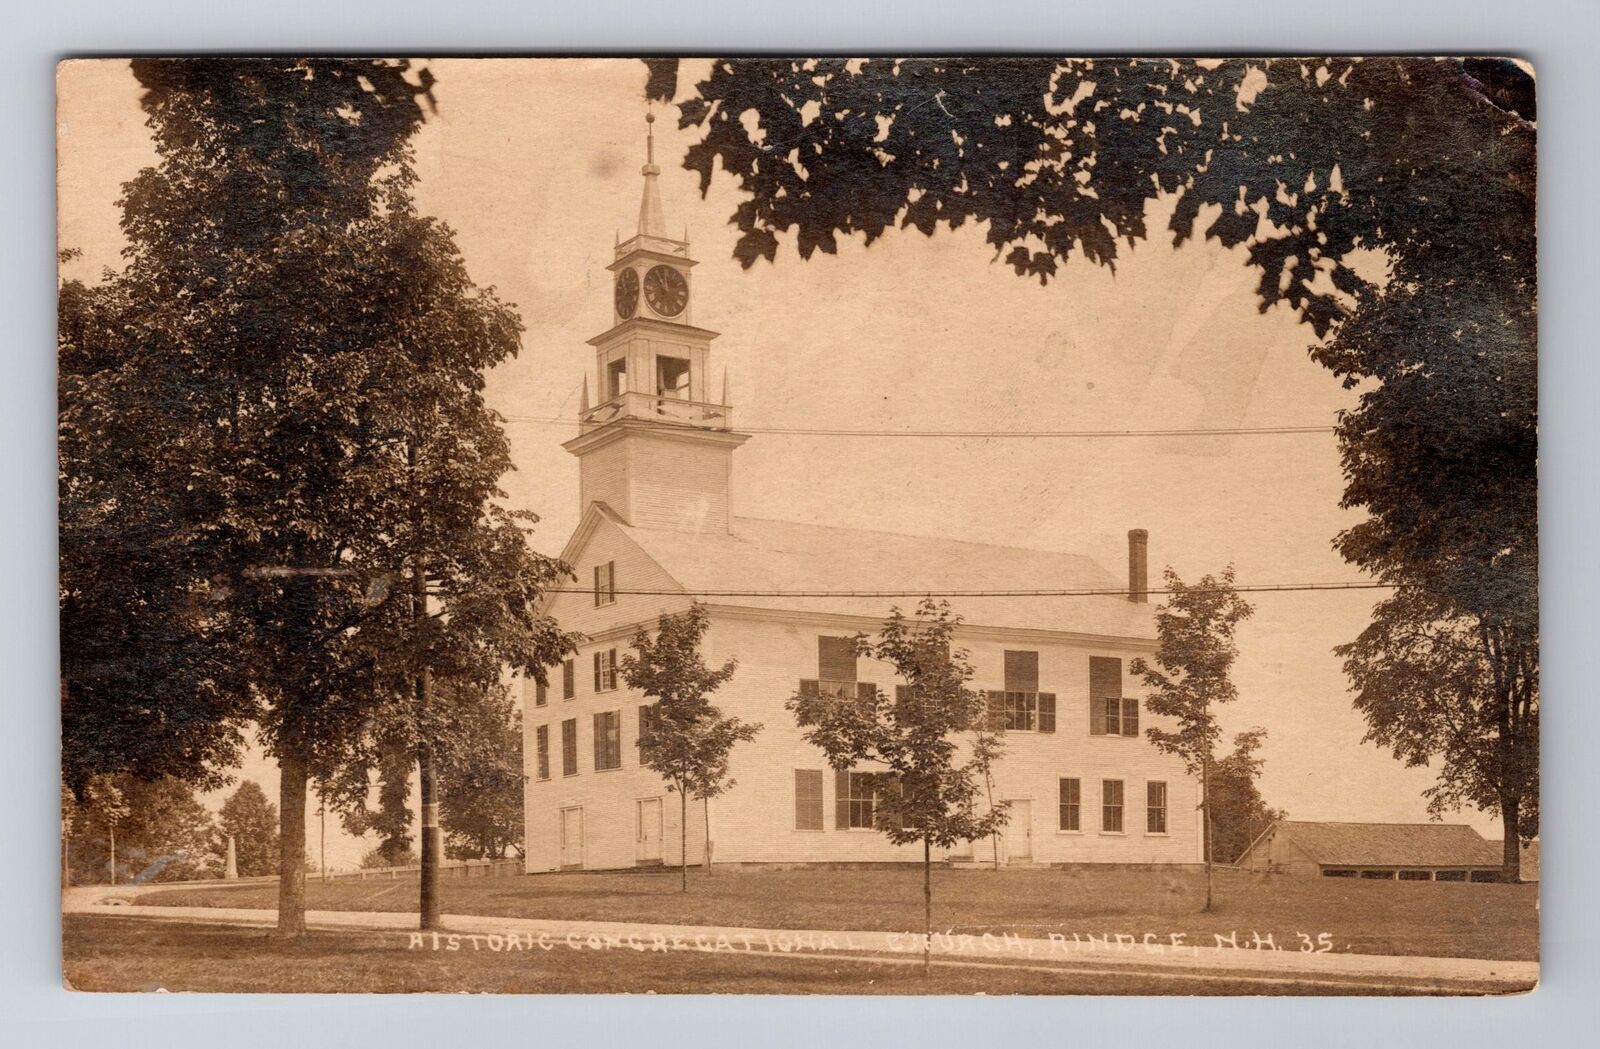 Rindge, NH-New Hampshire, RPPC: Historic Congregational Church, Vintage Postcard